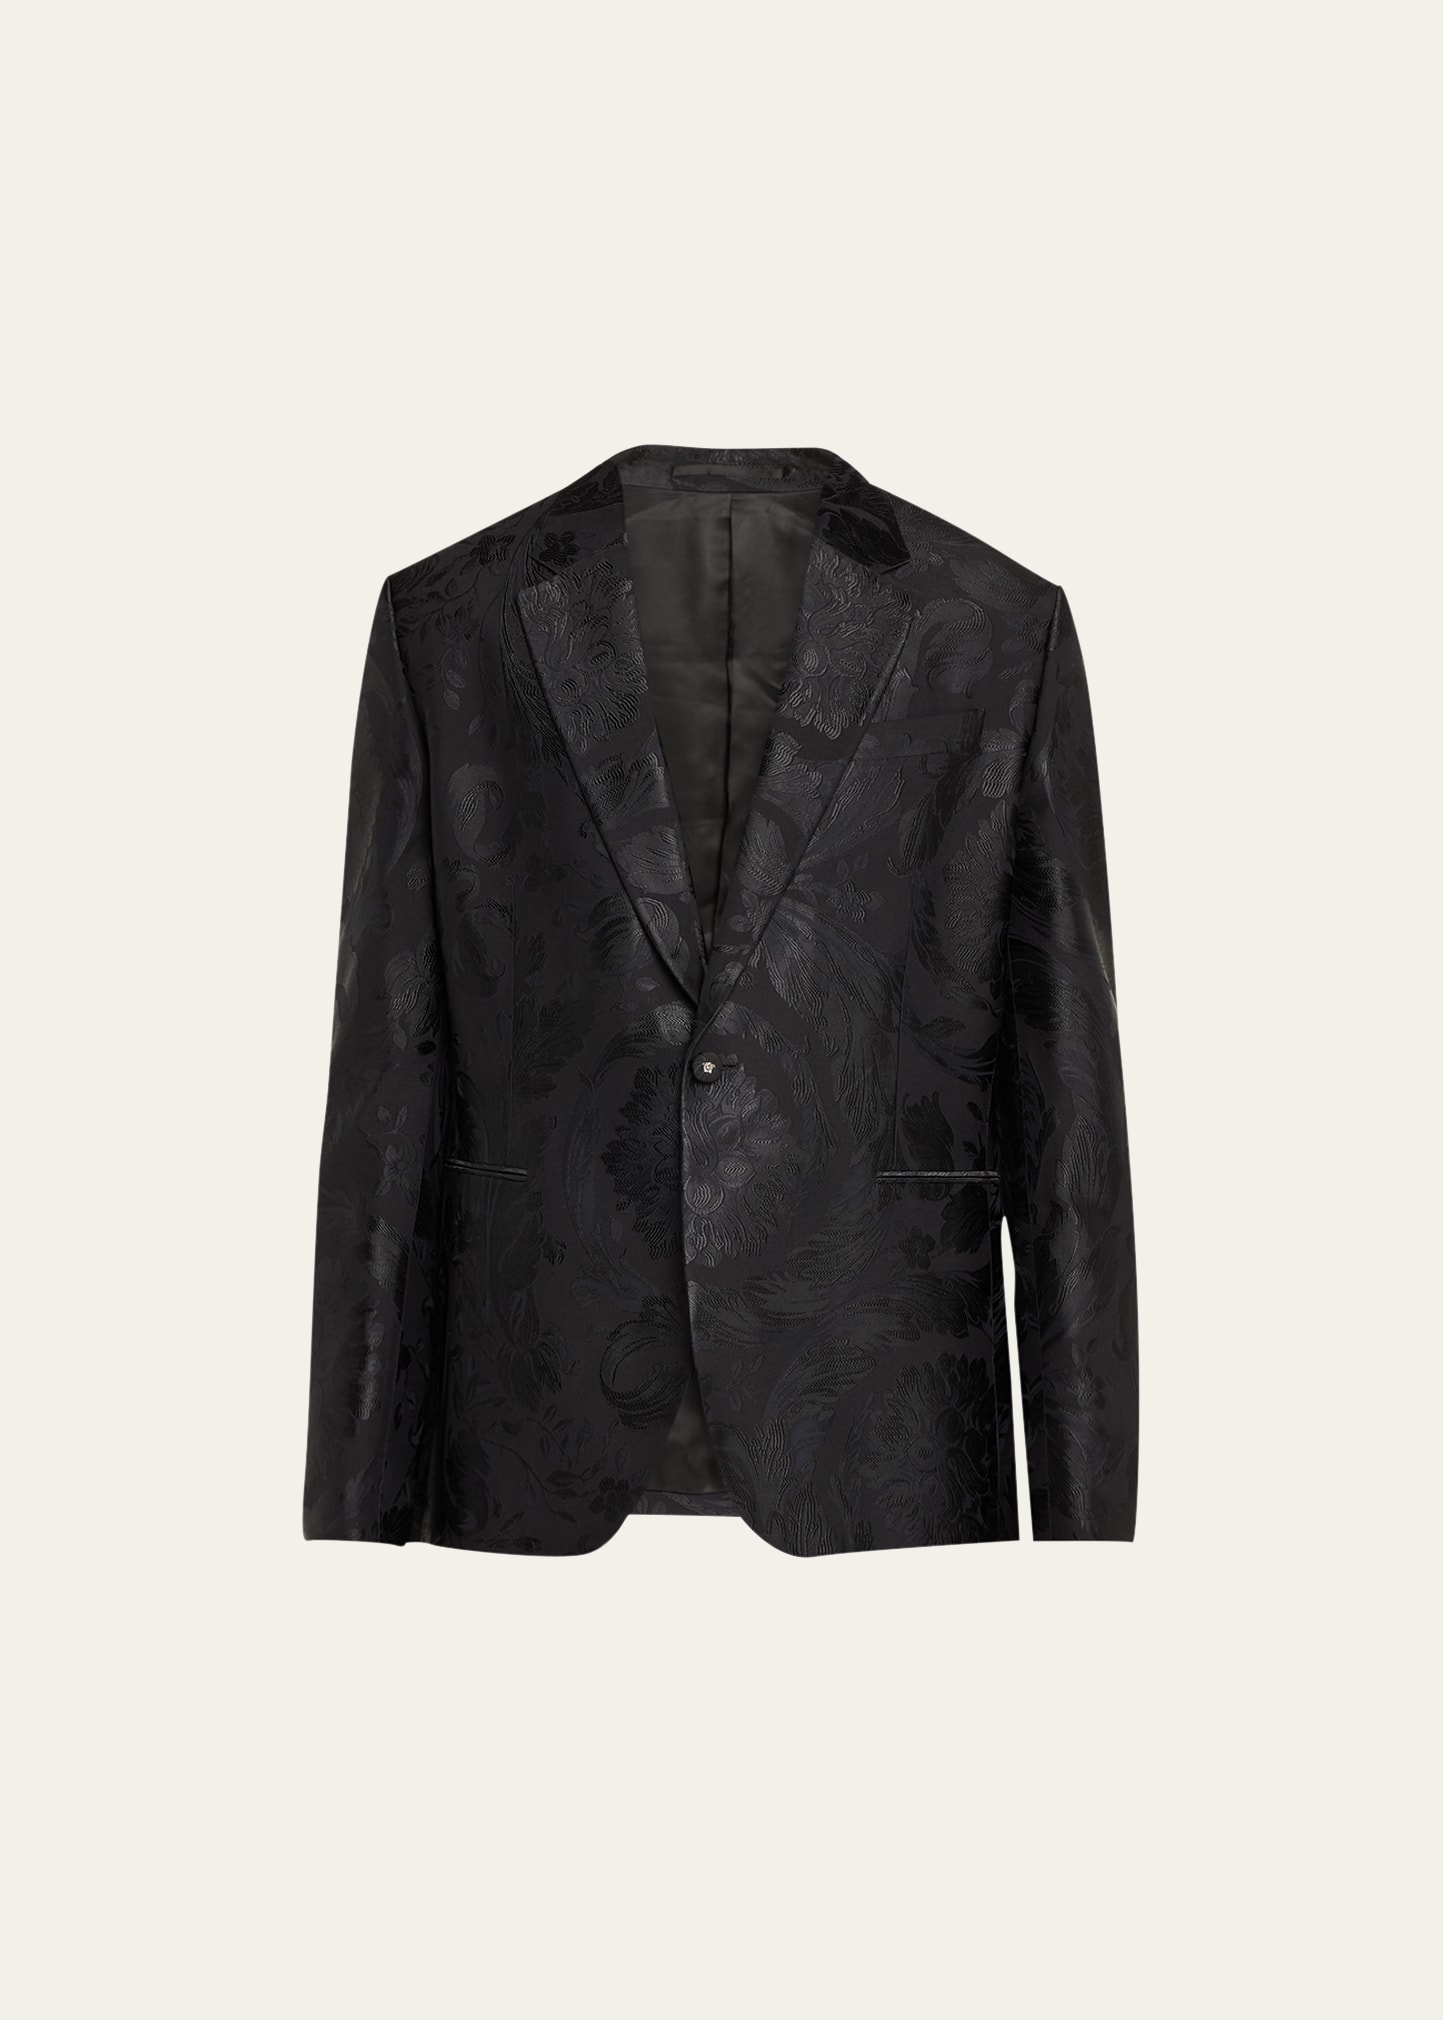 Versace Men's Barocco Jacquard Tuxedo Jacket In Black